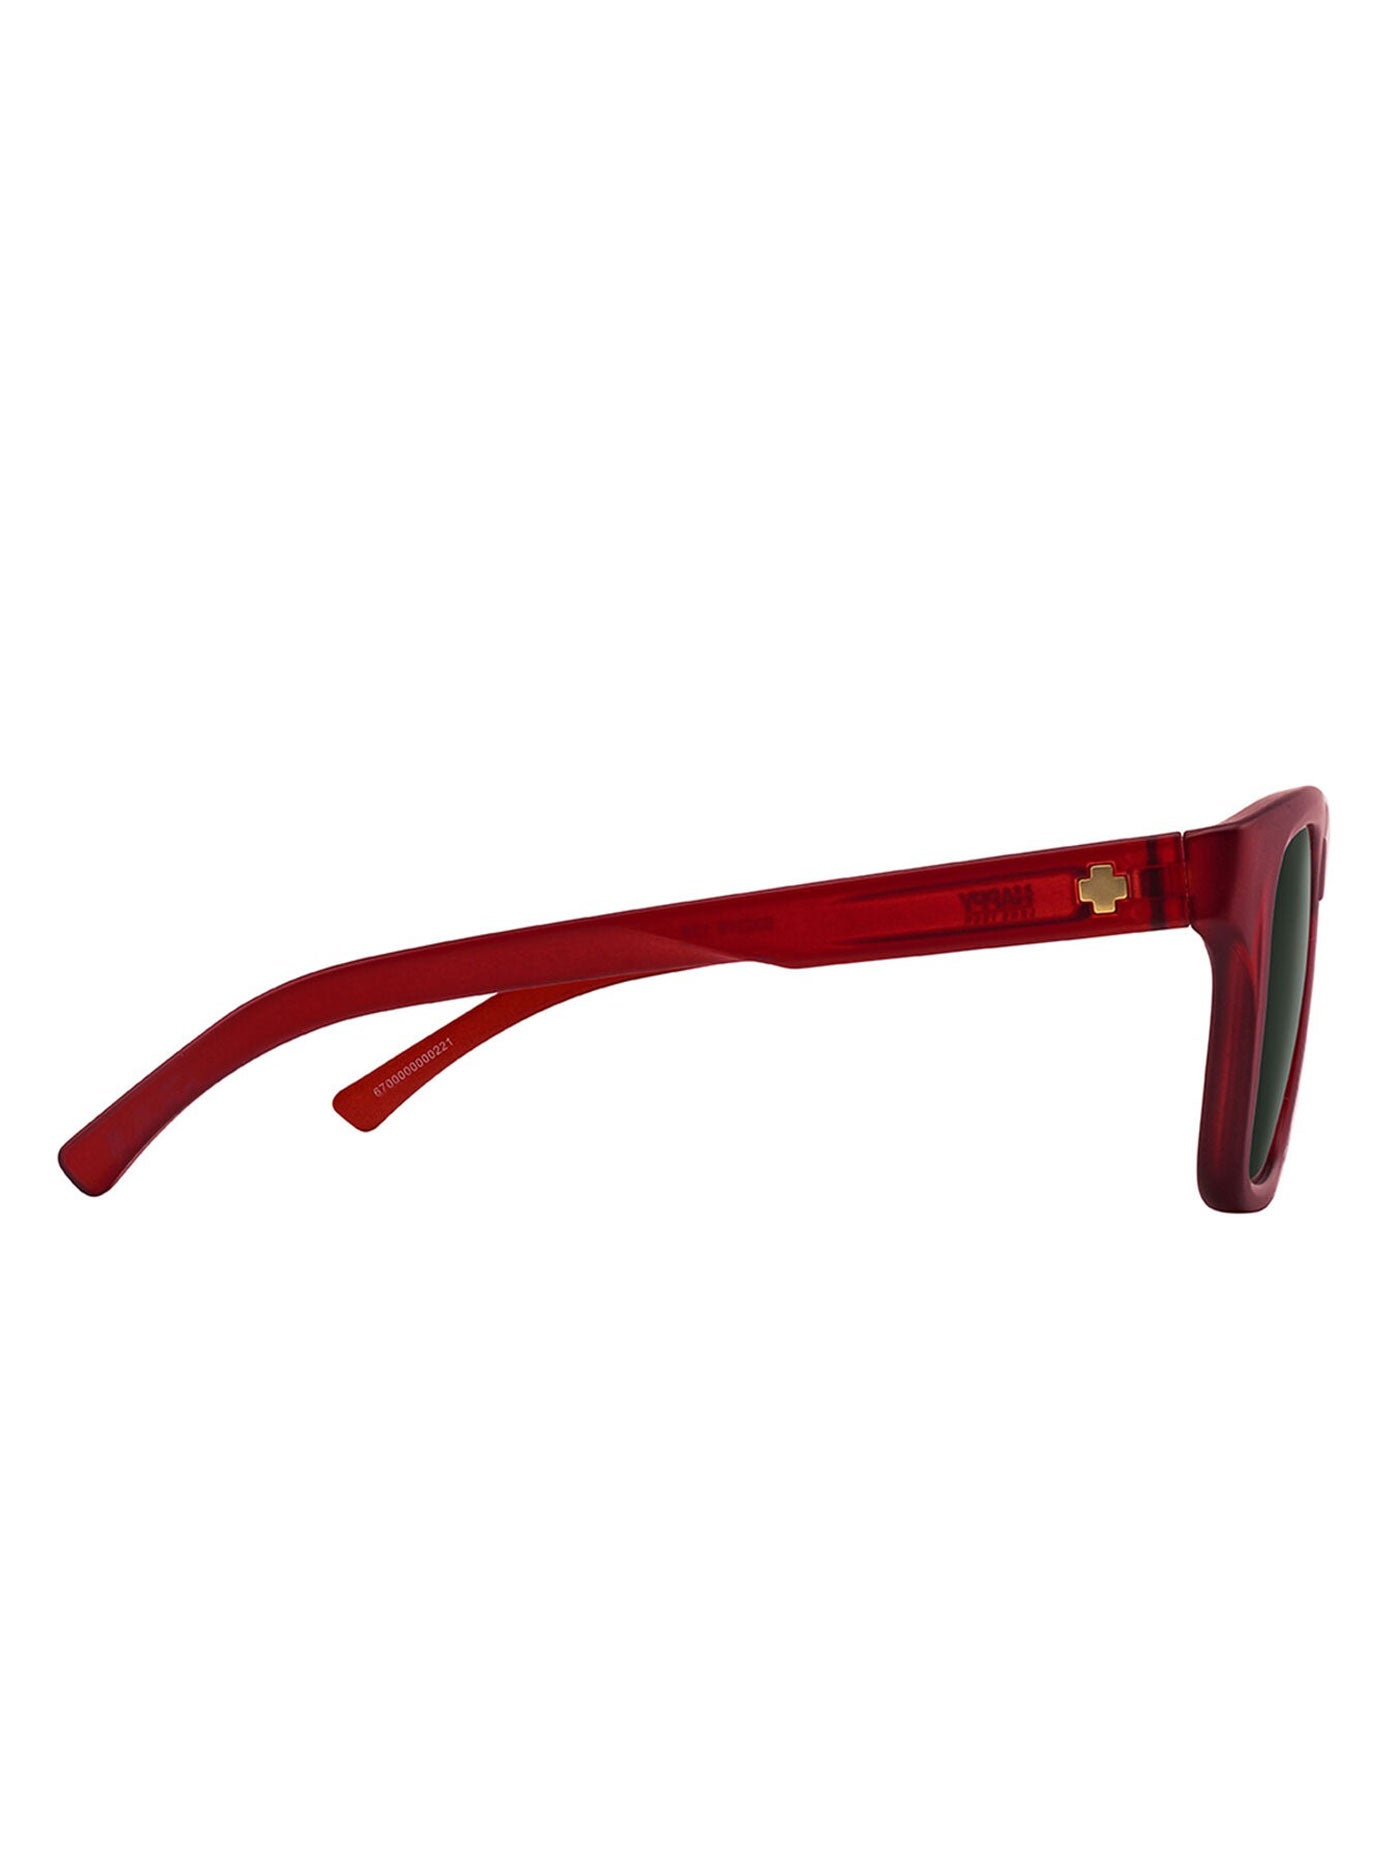 Spy Saxony Translucent Red/Gray Green Sunglasses